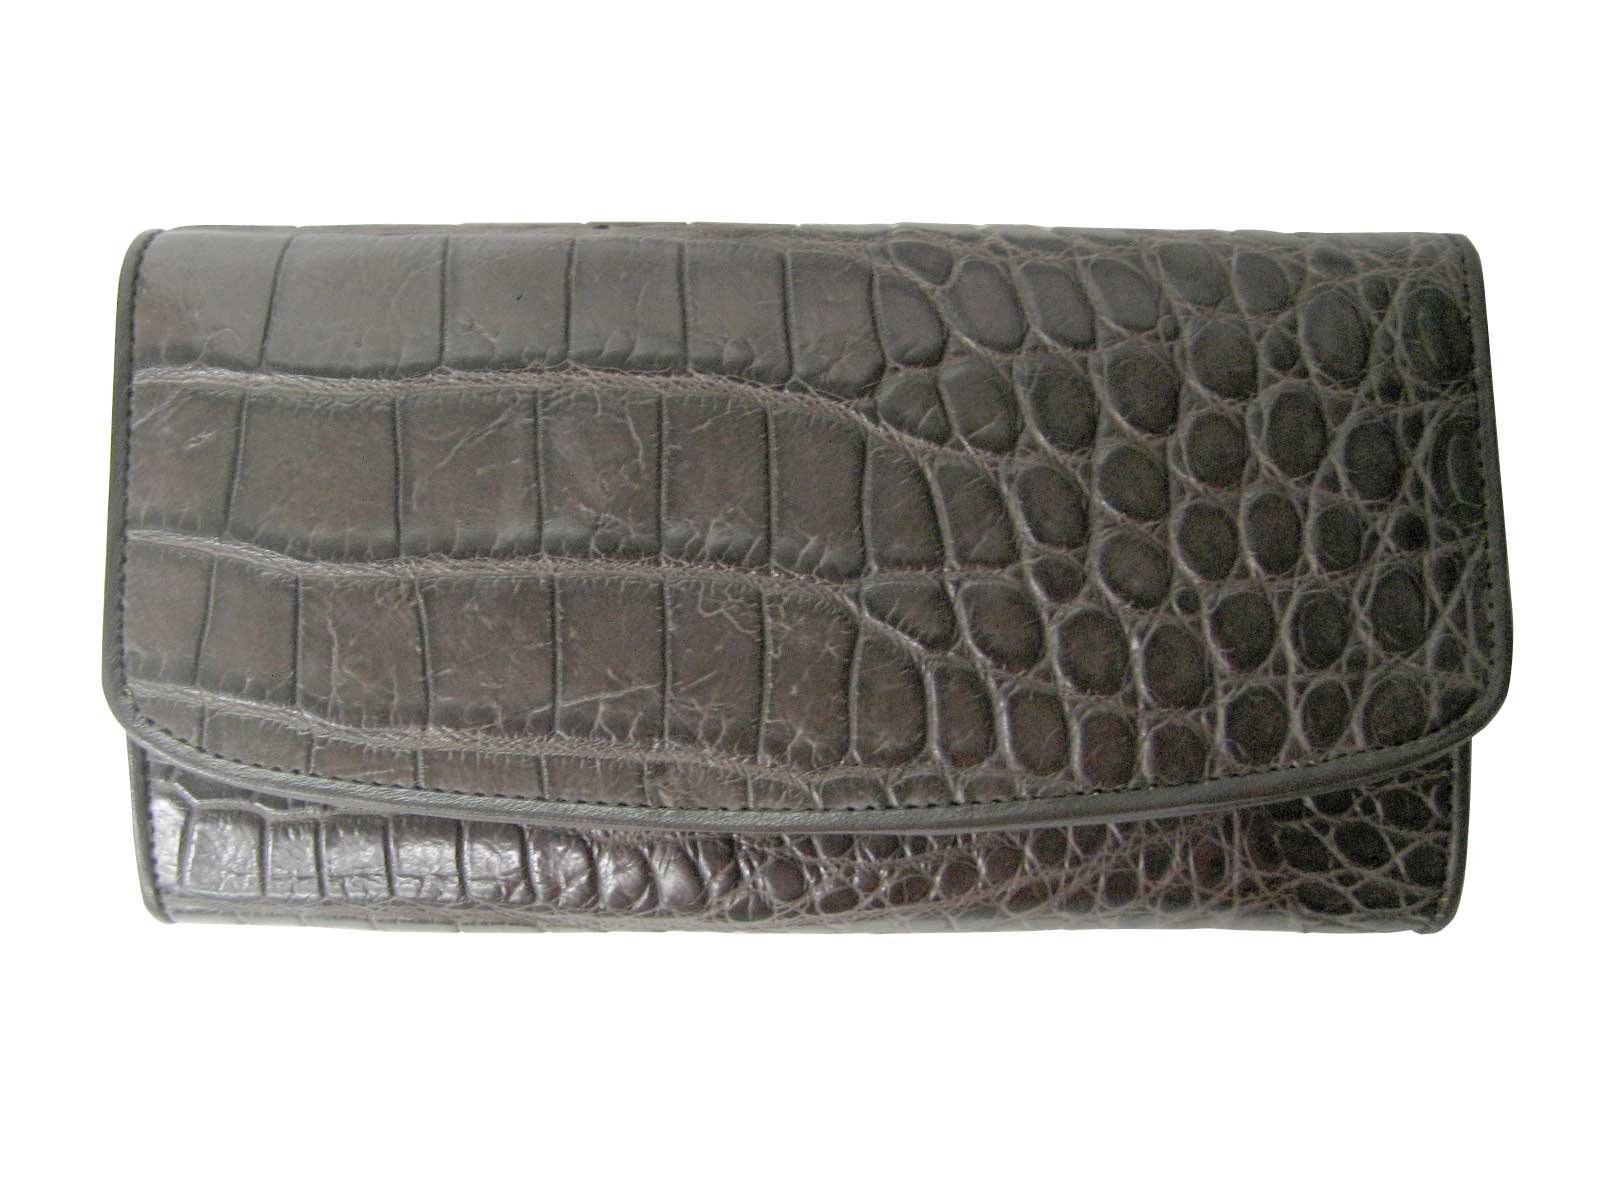 Ladies Belly Crocodile Leather Clutch Wallet in Chocolate Brown Crocodile Skin #CRW468W